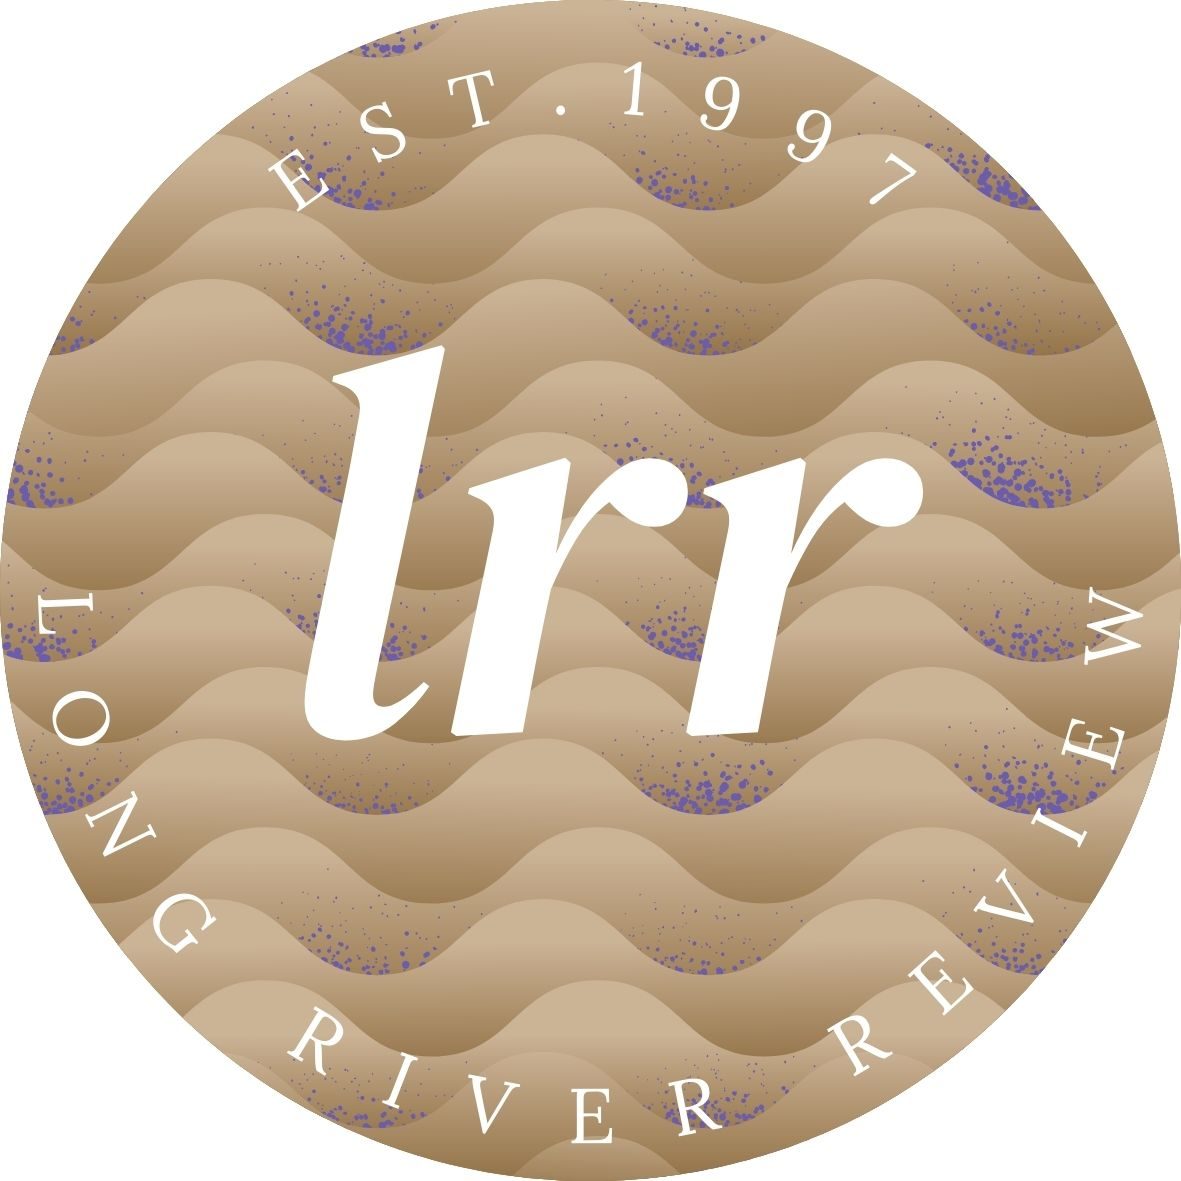 Long River Review